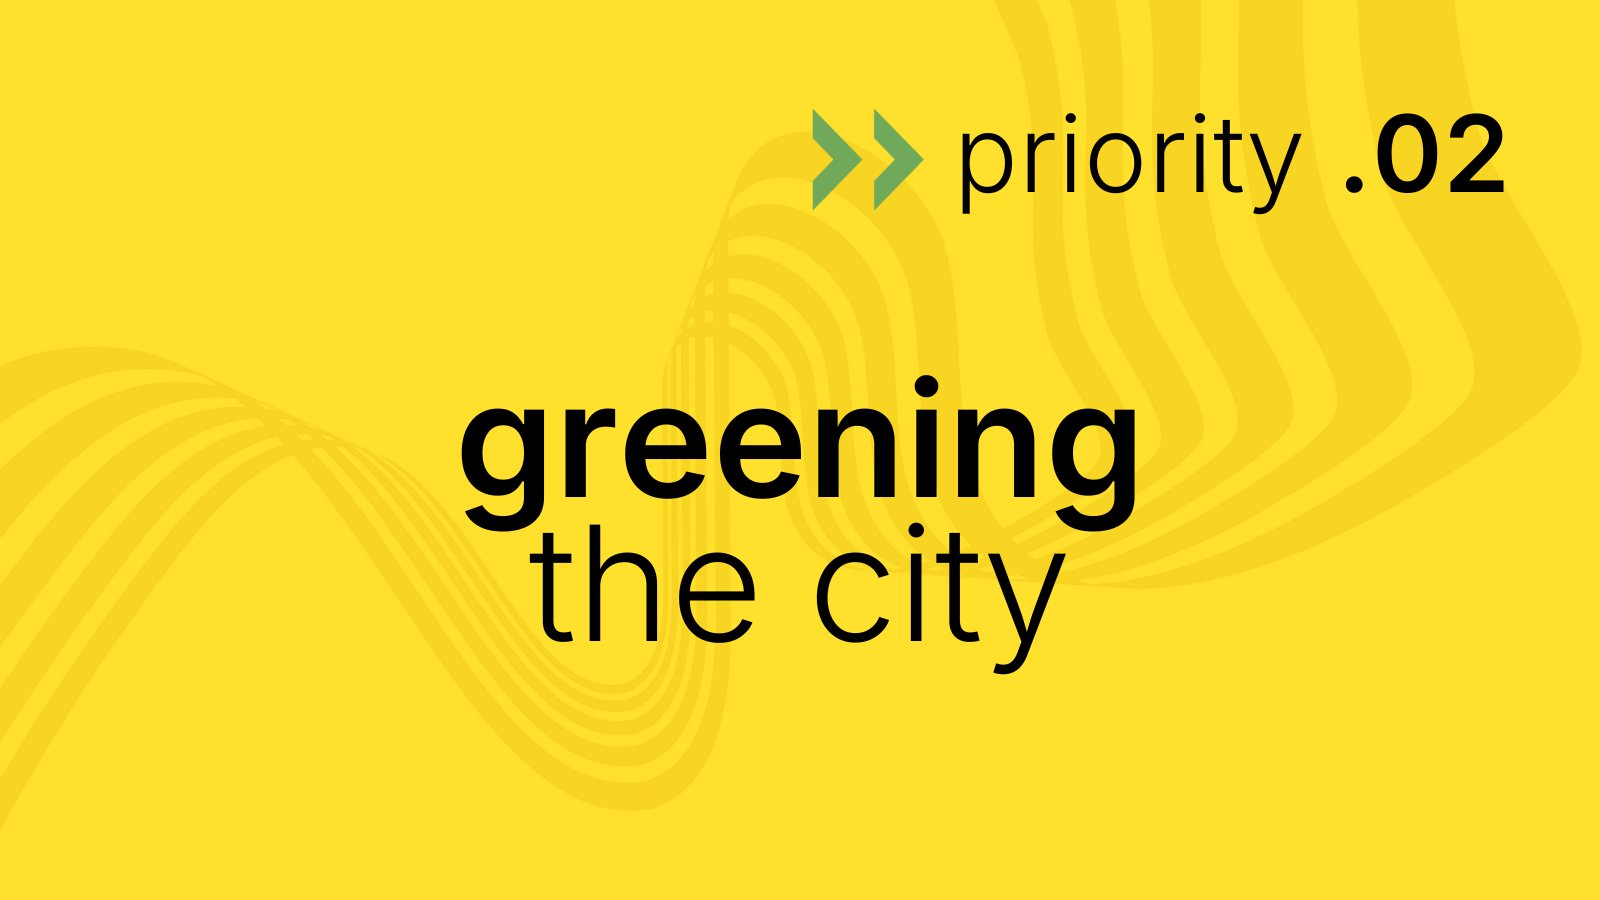 Priority 02: Greening the city